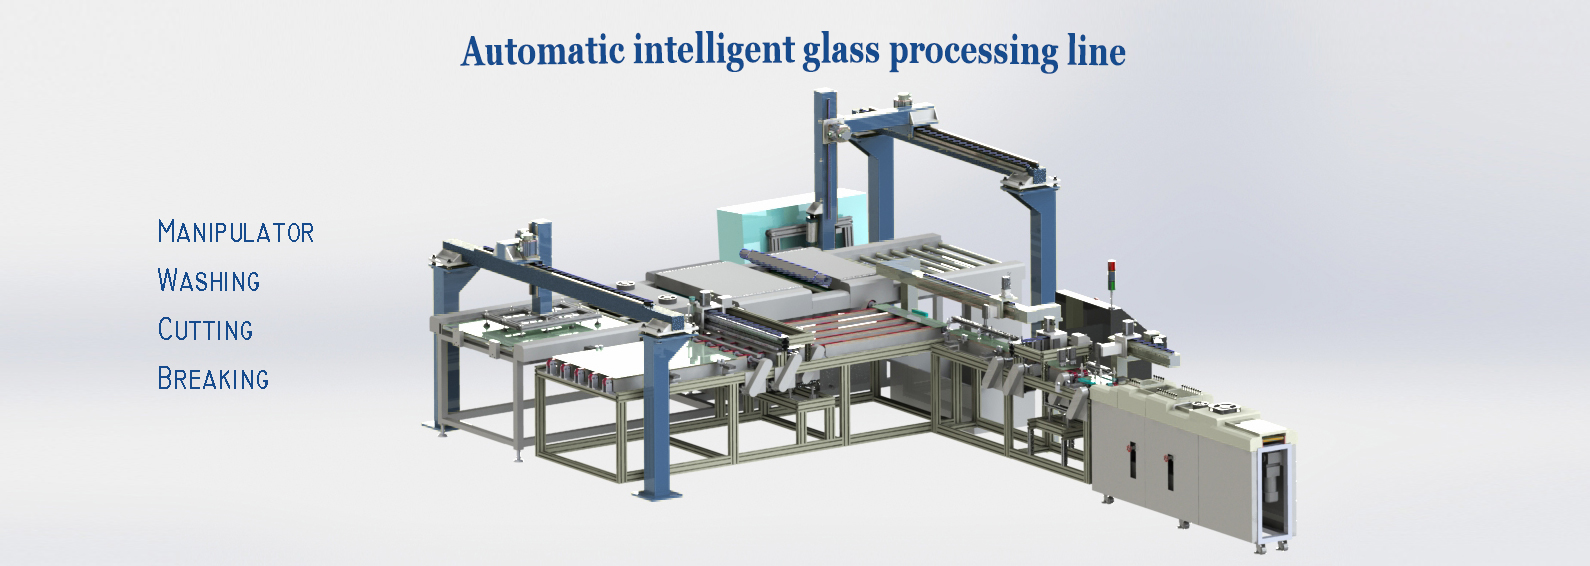 High intelligent glass processing line